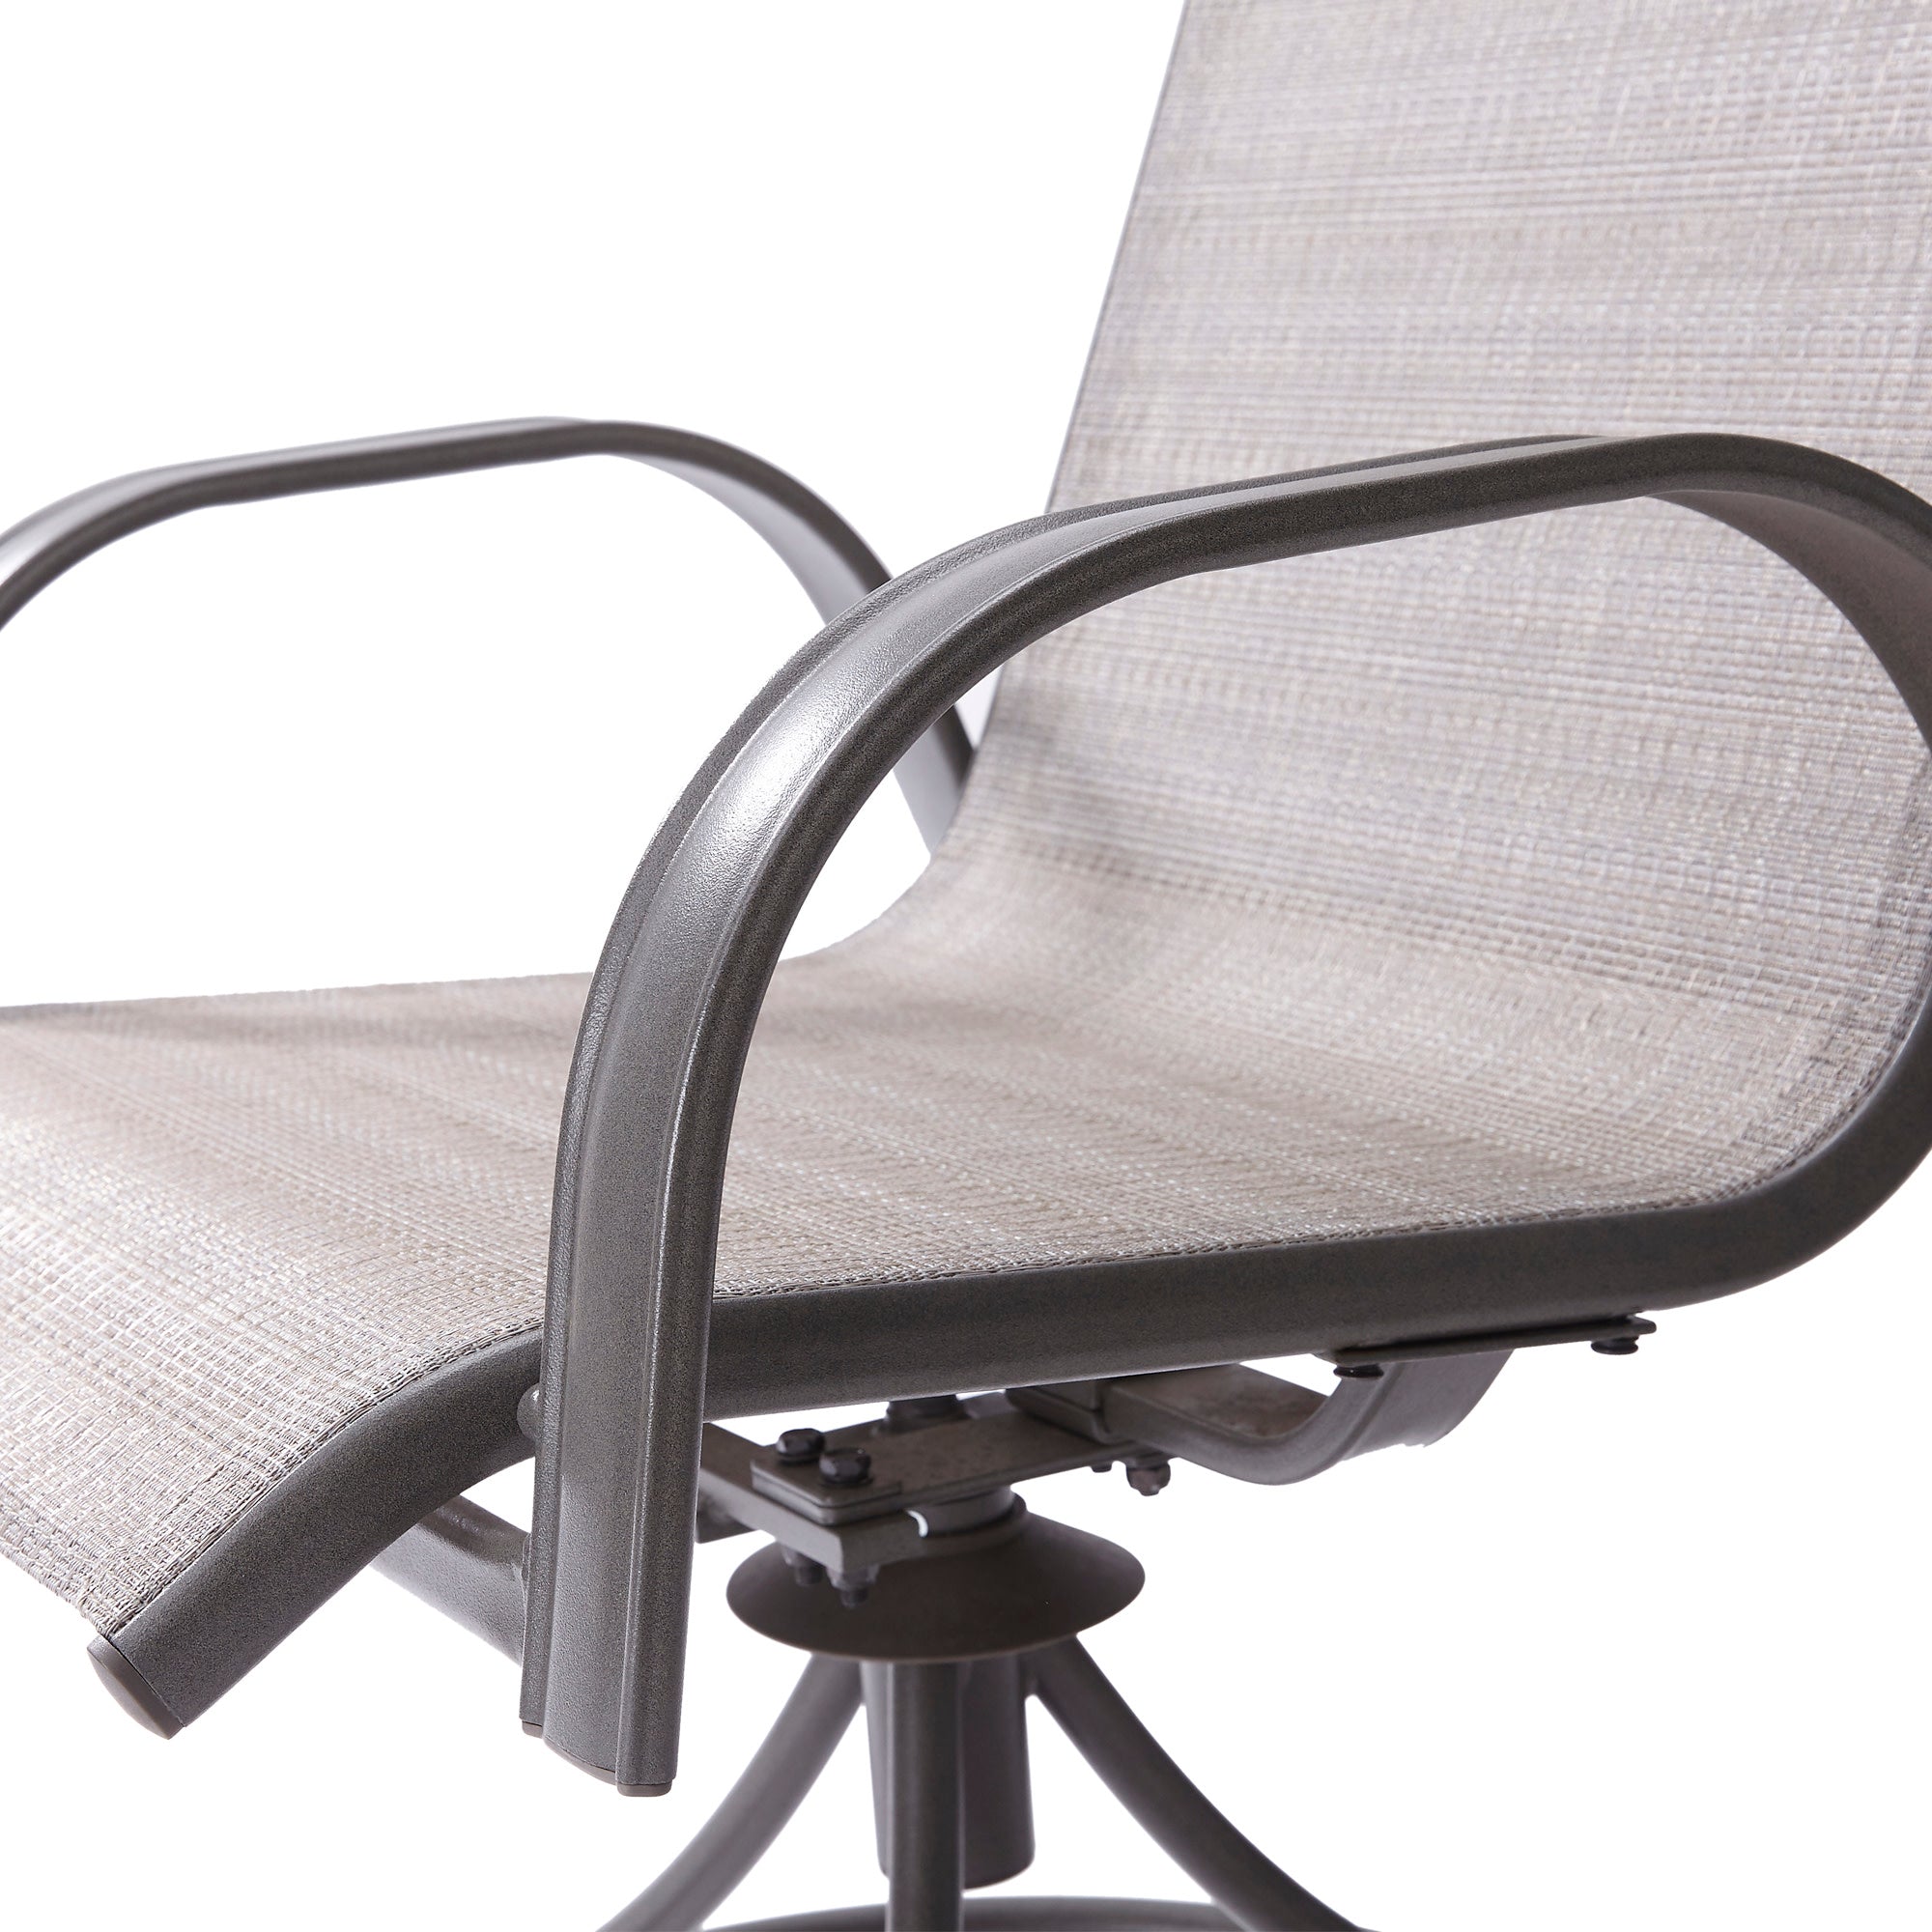 Teamson Home Indoor/Outdoor 3 Piece Steel Bistro Table with Swivel Chairs Set, Tan